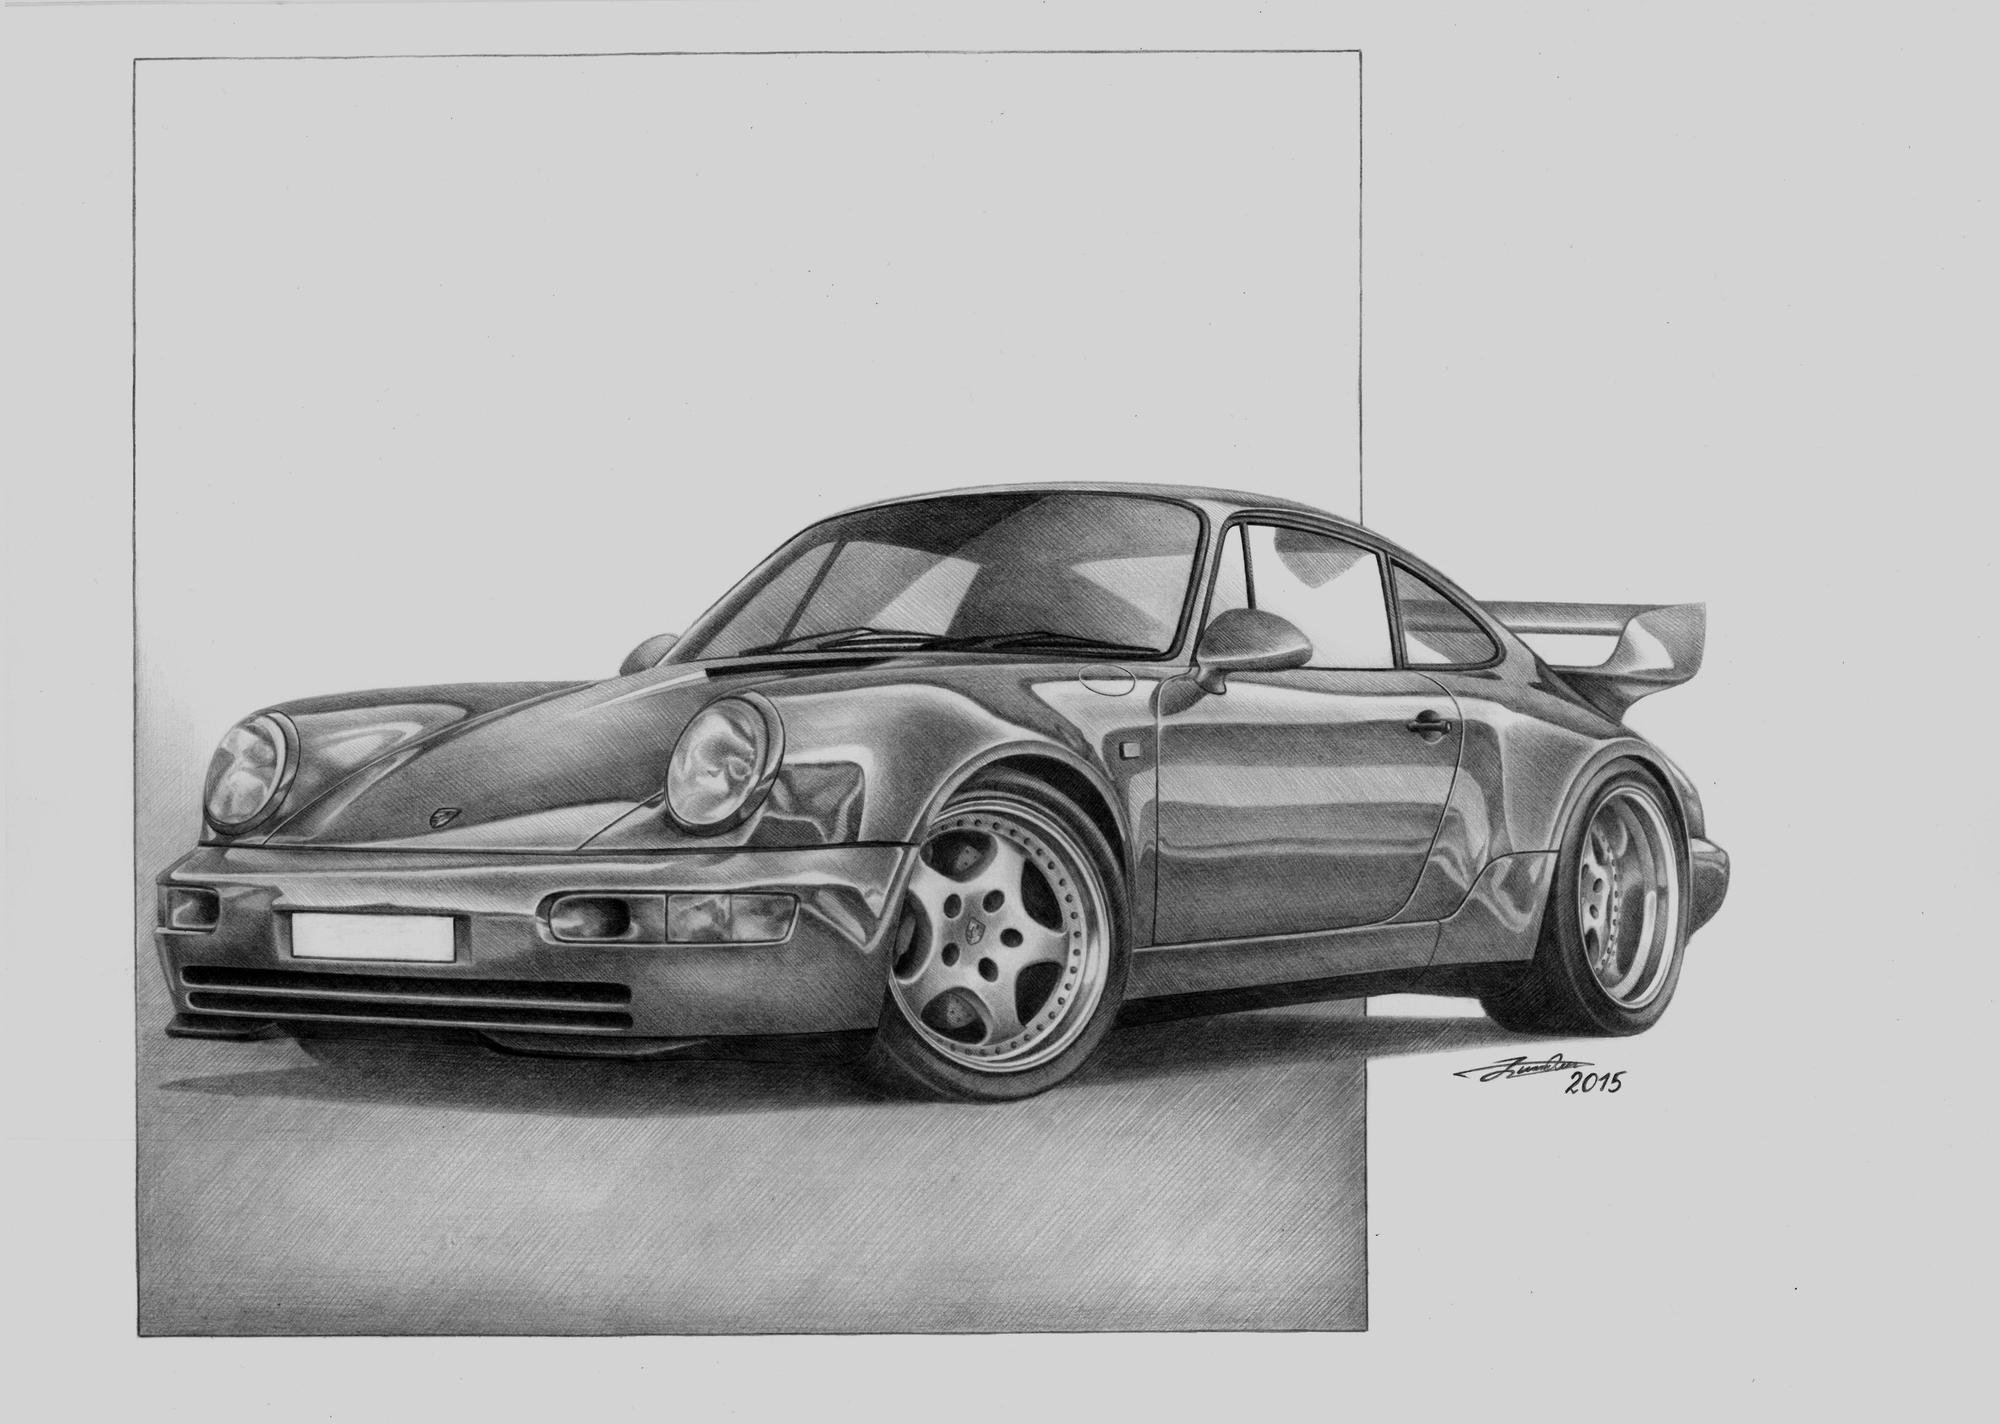 Some Porsche drawings - Teamspeed.com